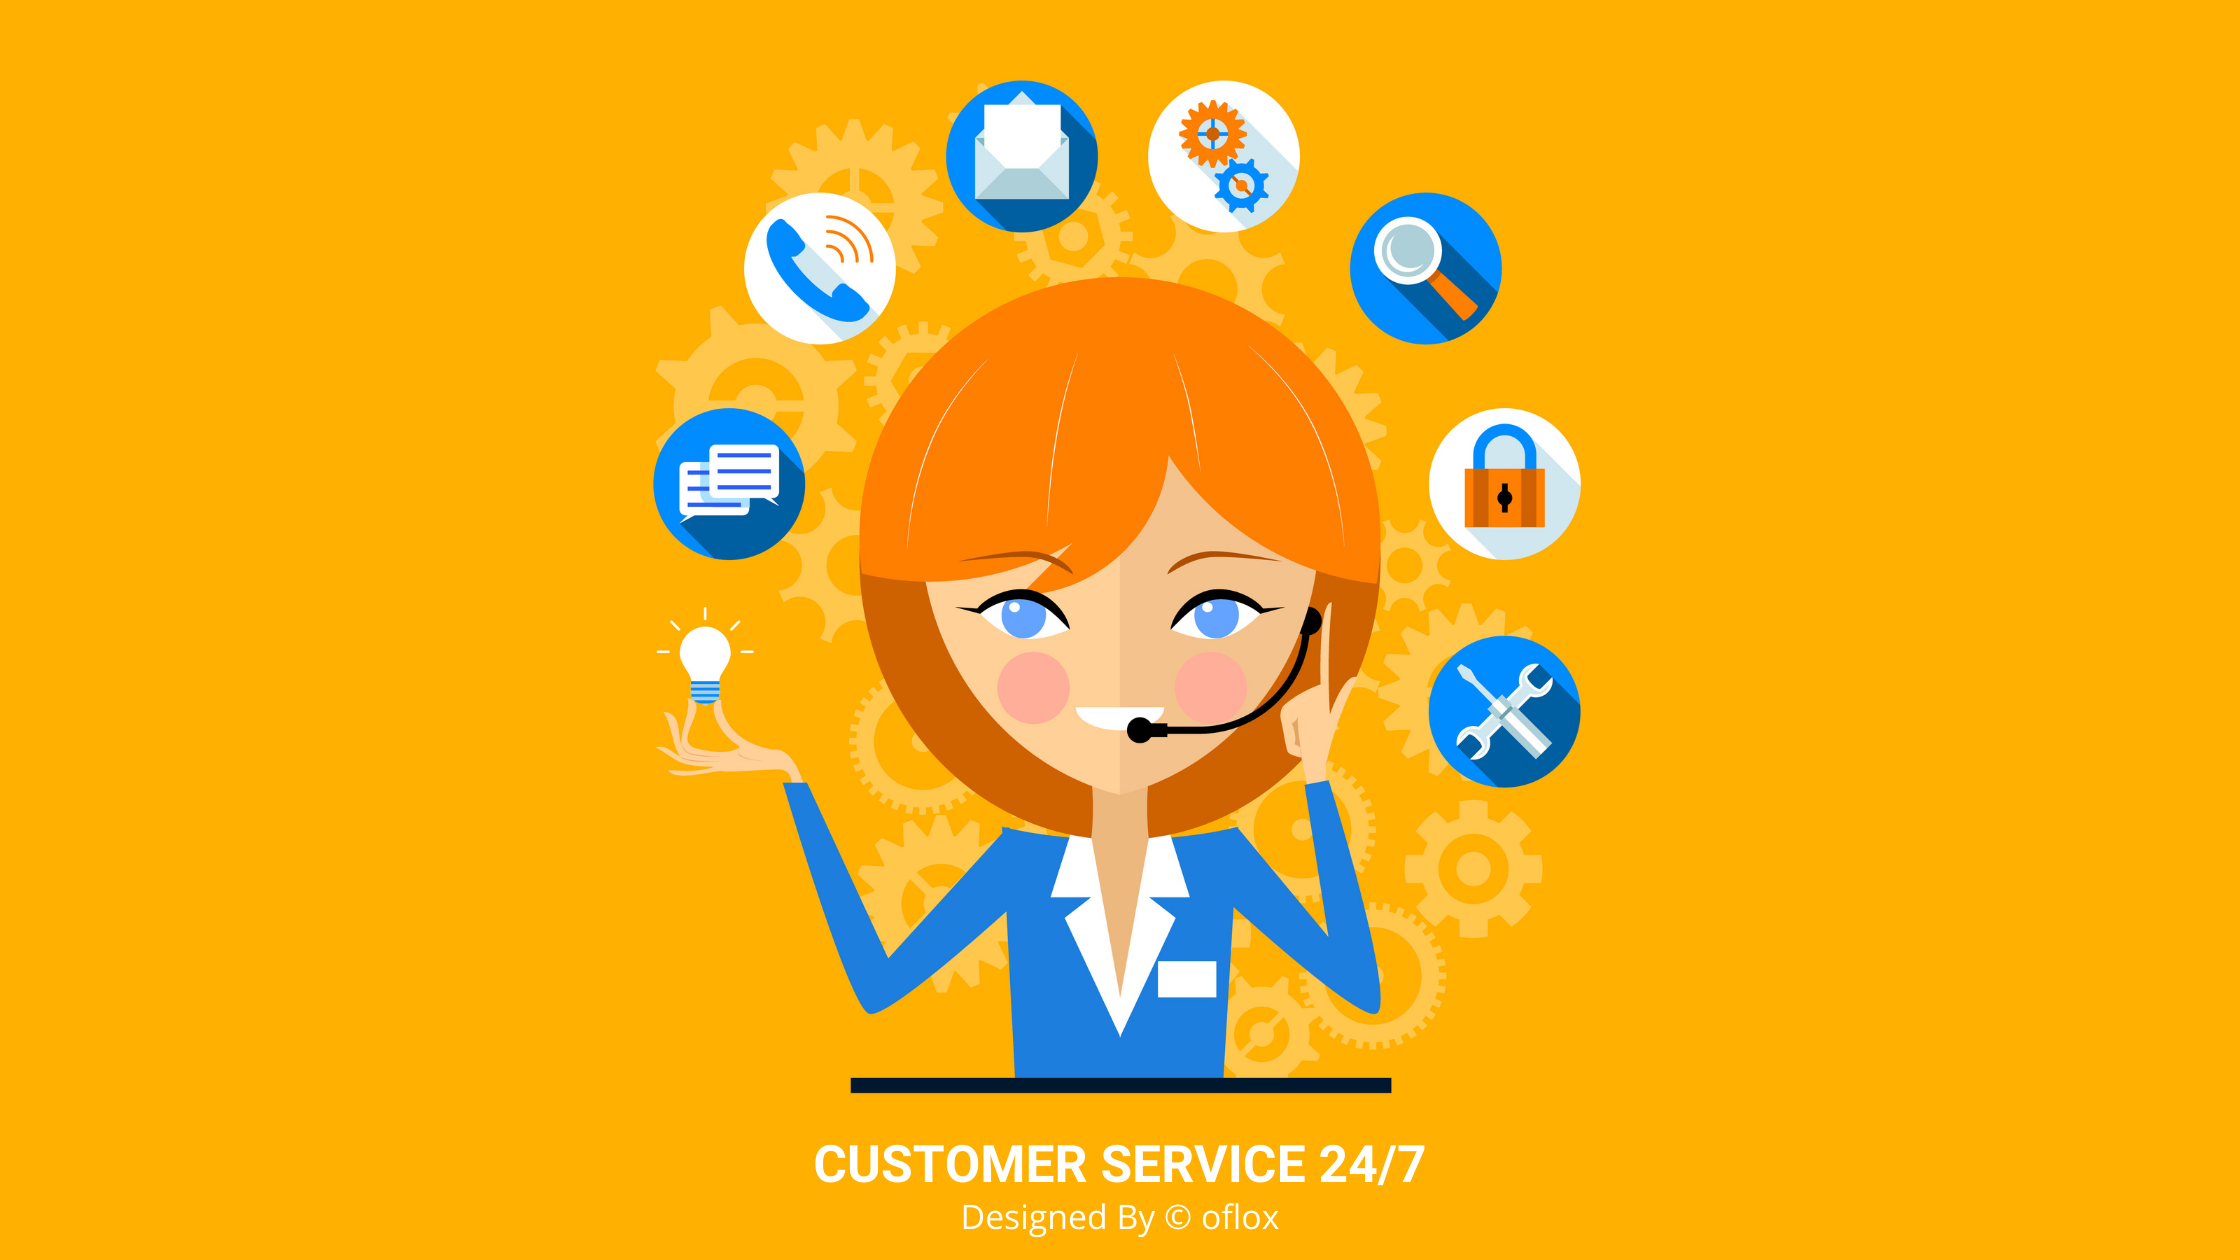 Customer Service Team